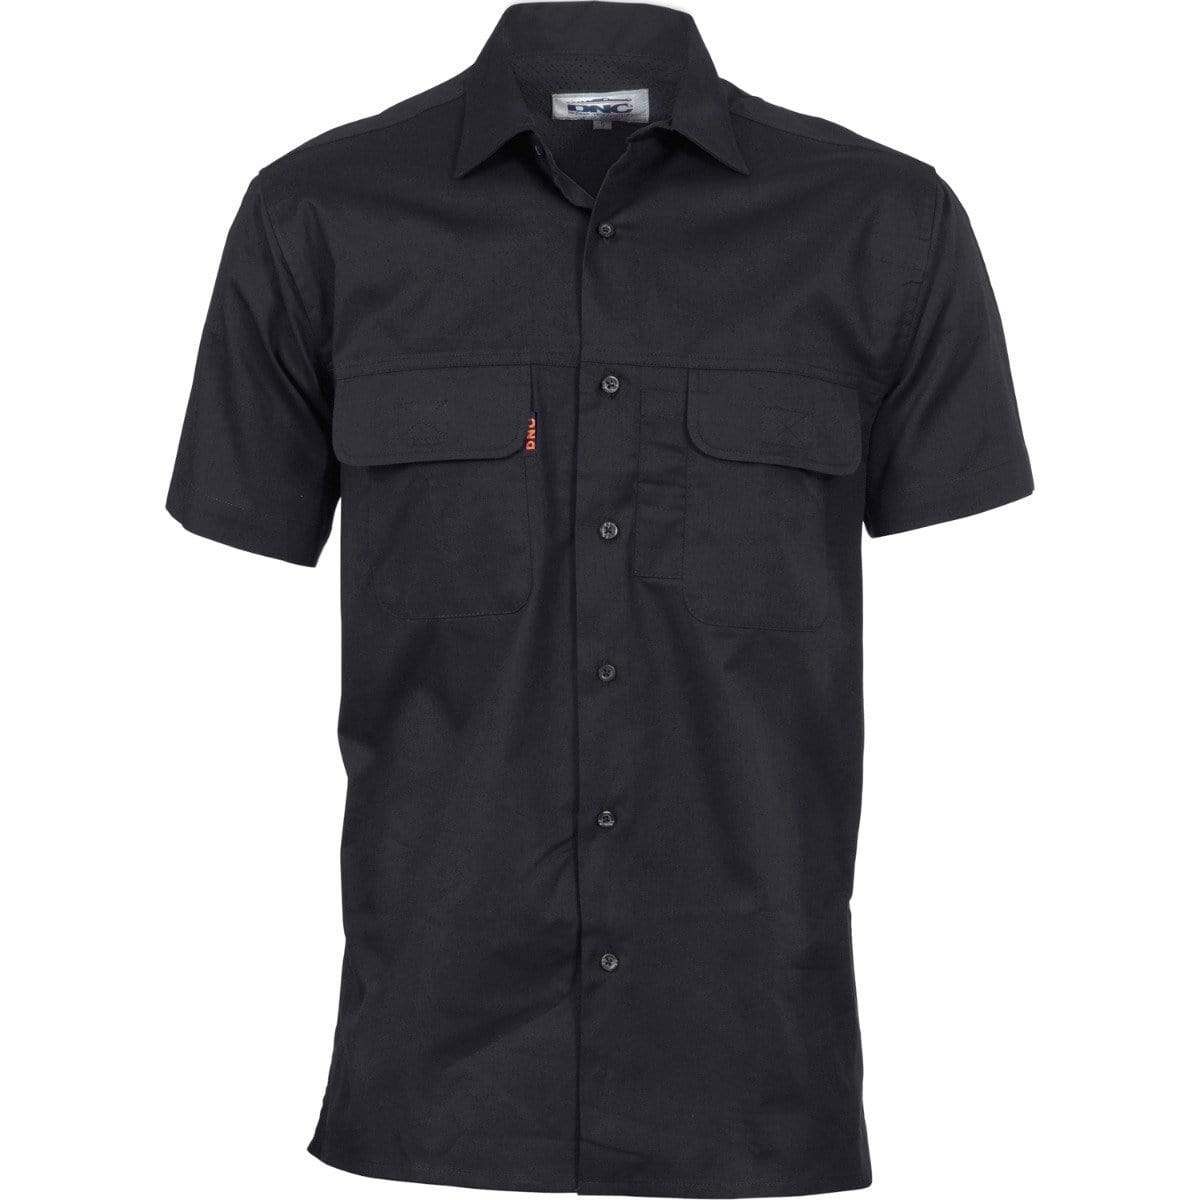 Dnc Workwear Three Way Cool Breeze Short Sleeve Shirt - 3223 Work Wear DNC Workwear Black S 